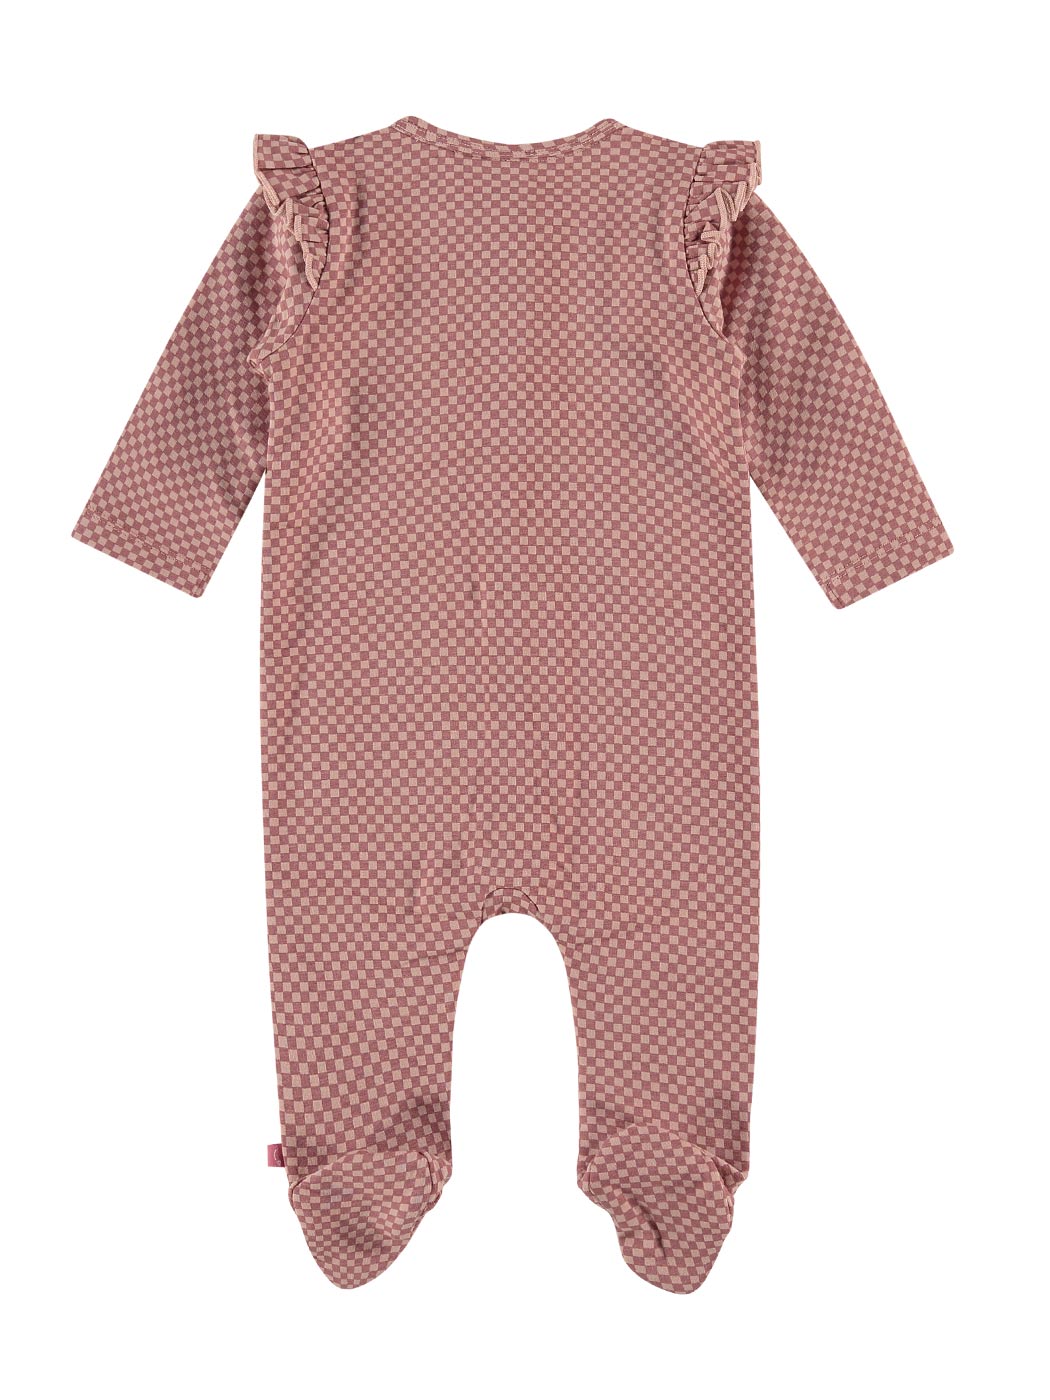 Babyface - Baby Girls suit- NWB23628746 Pink